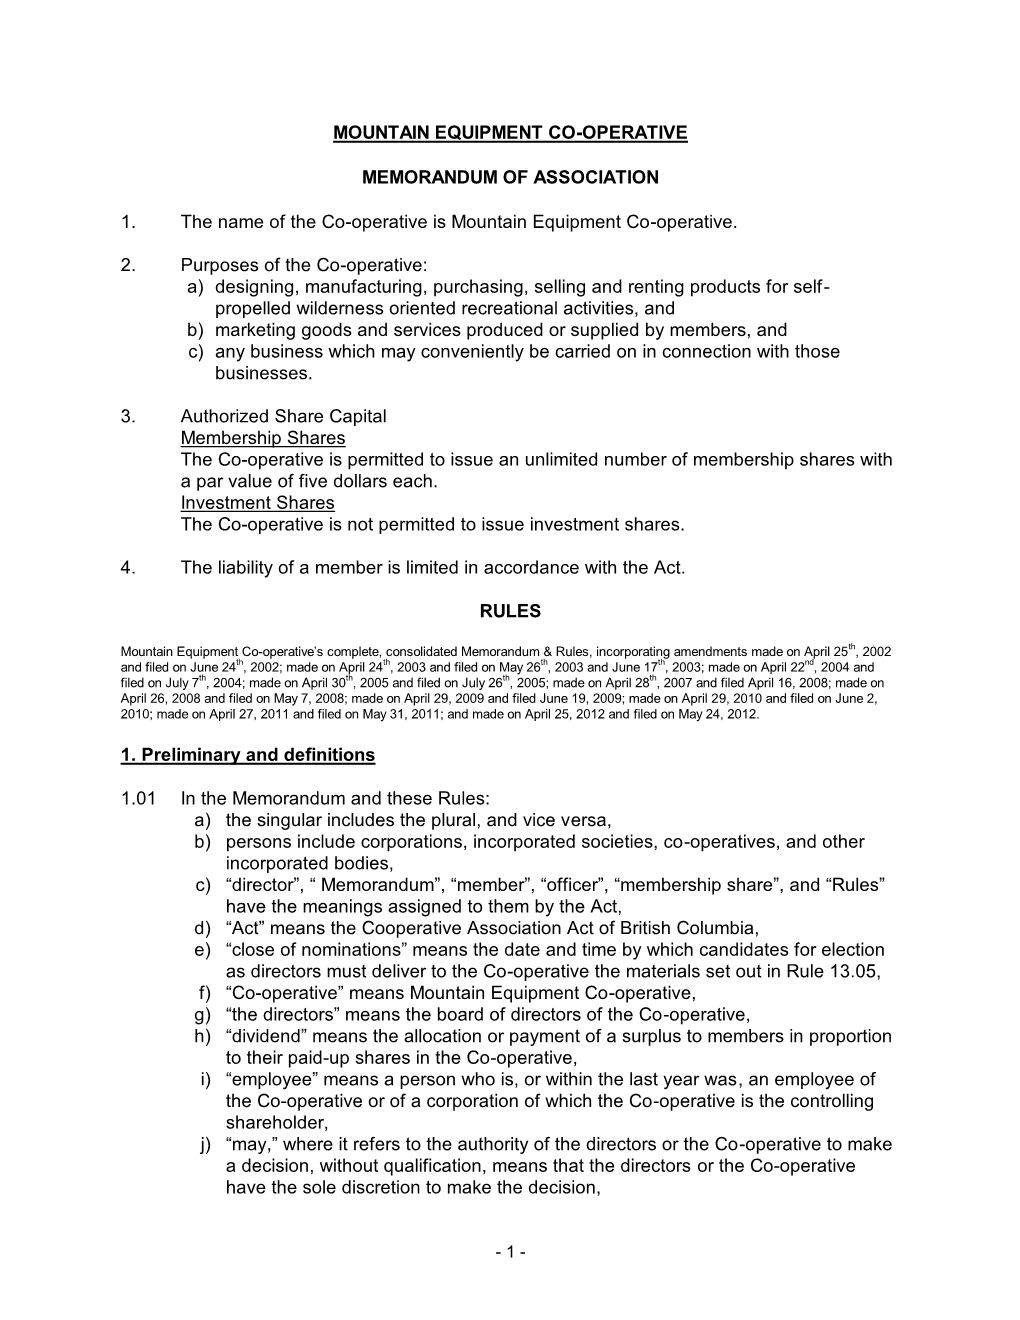 Mountain Equipment Co-Operative Memorandum of Association